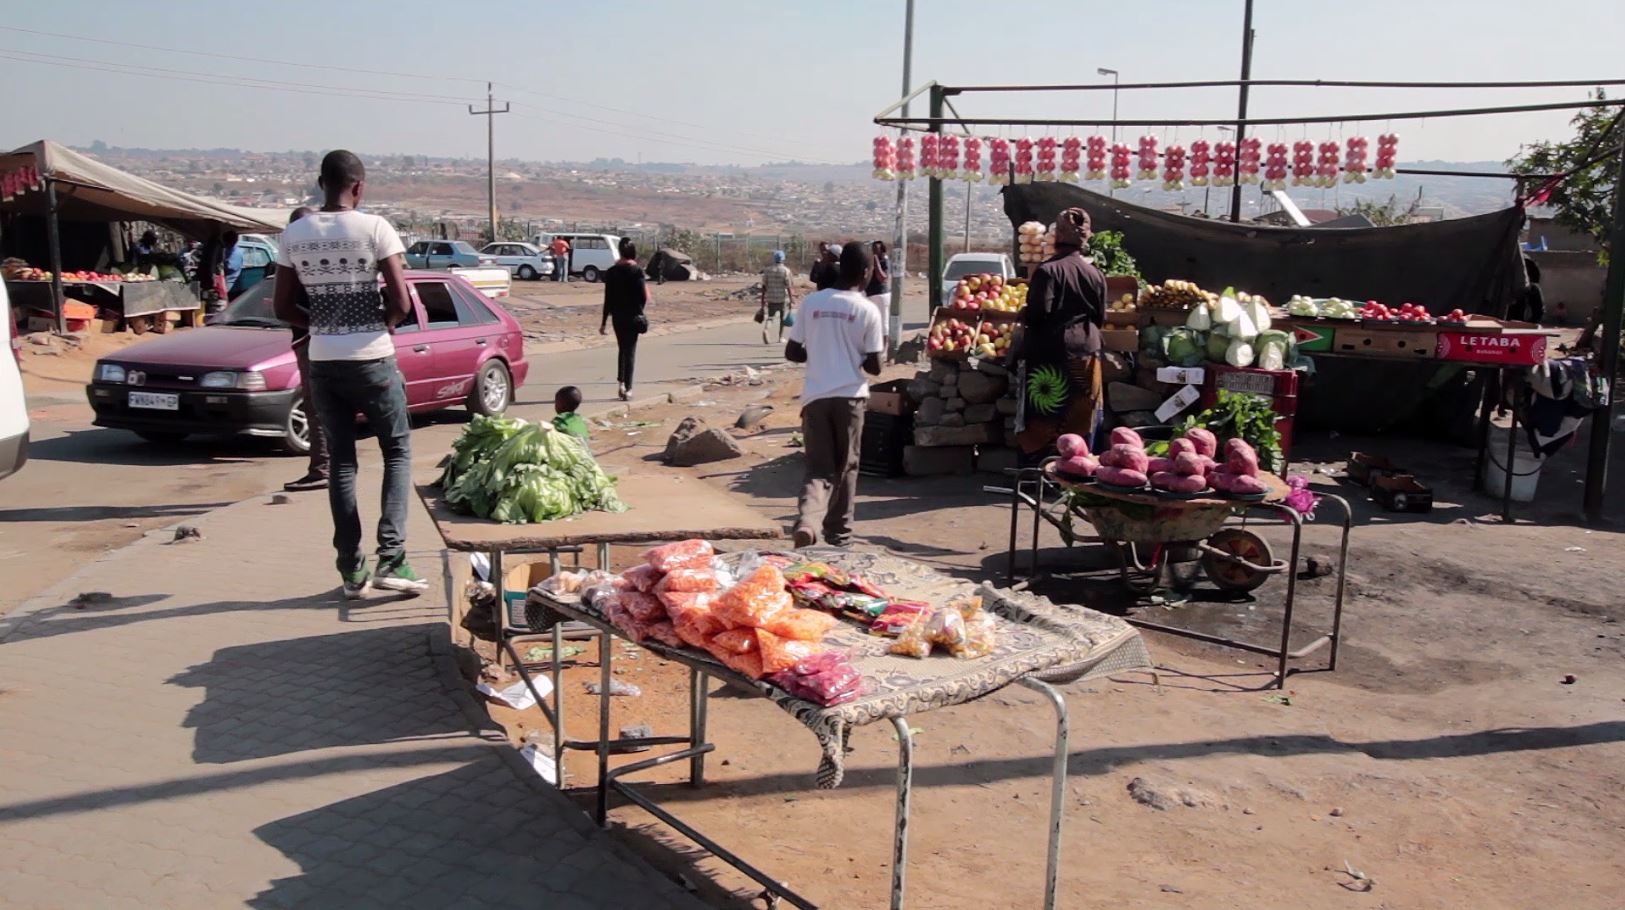 Informal market in South Africa